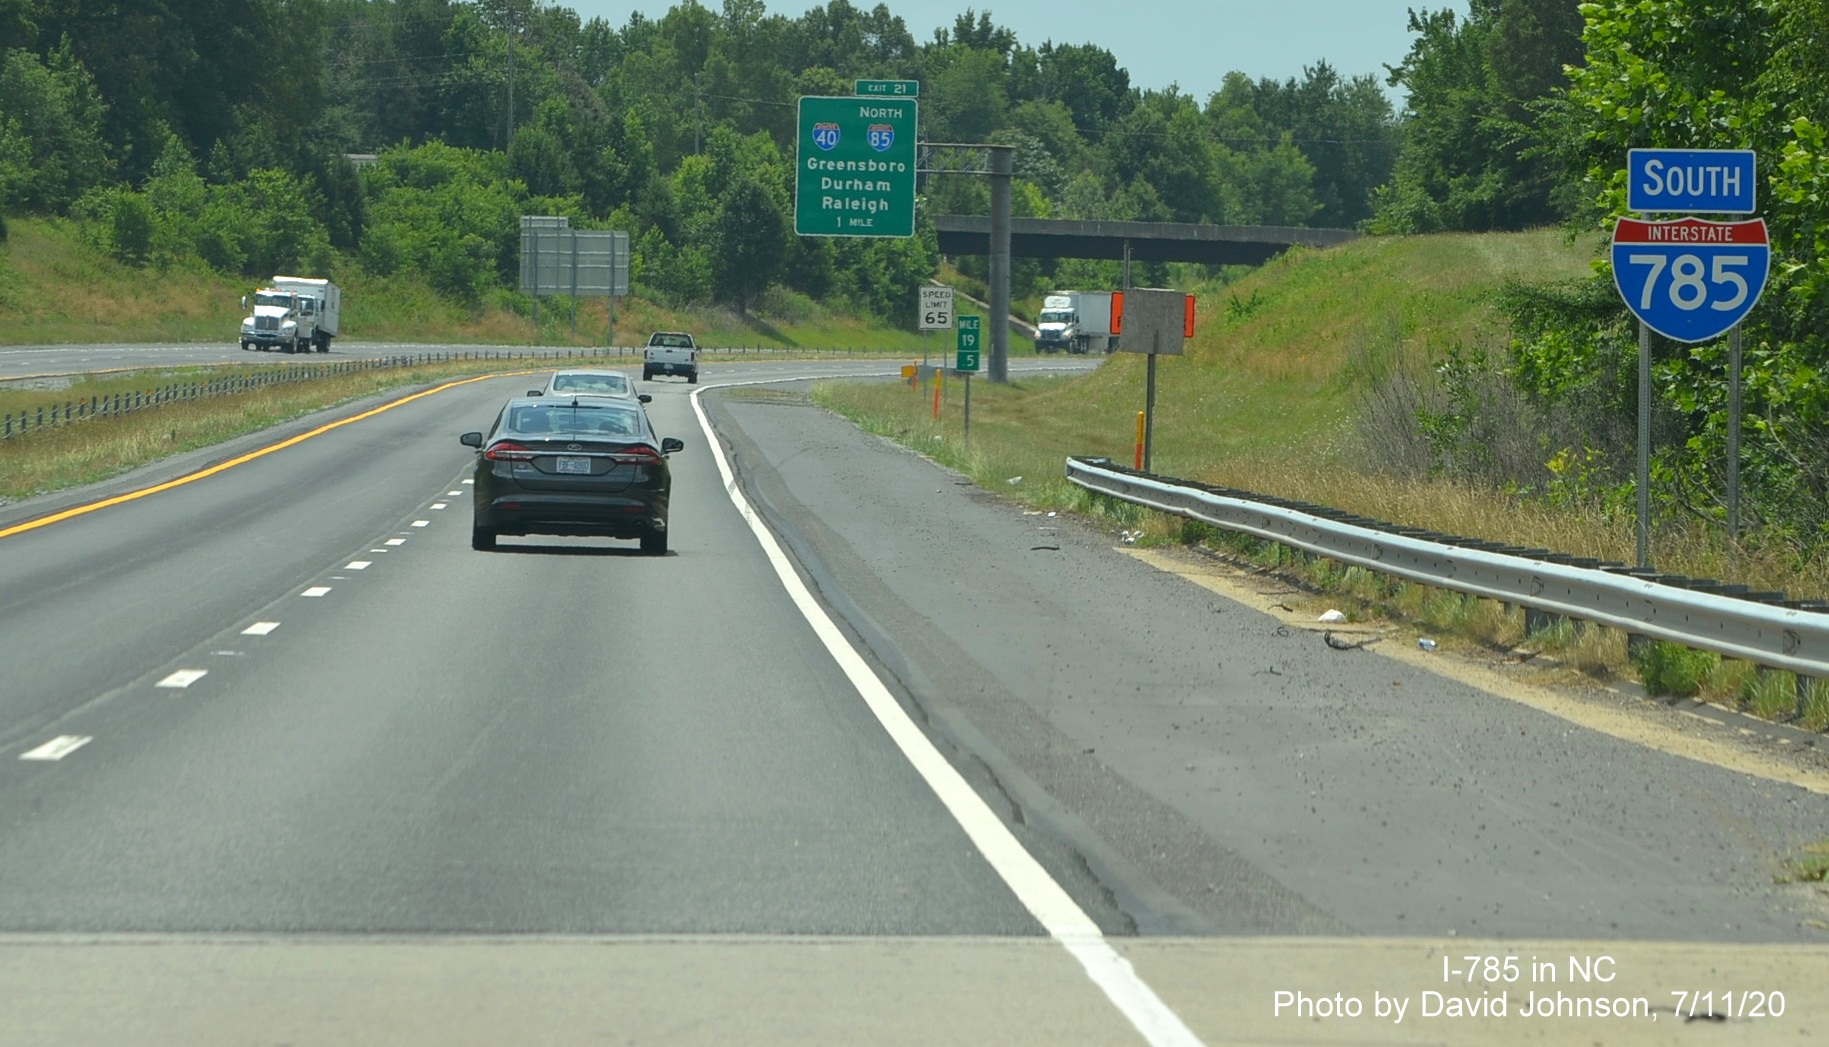 Image of last South I-785 reassurance marker following US 70 interchange on Greensboro Urban Loop, by David Johnson July 2020